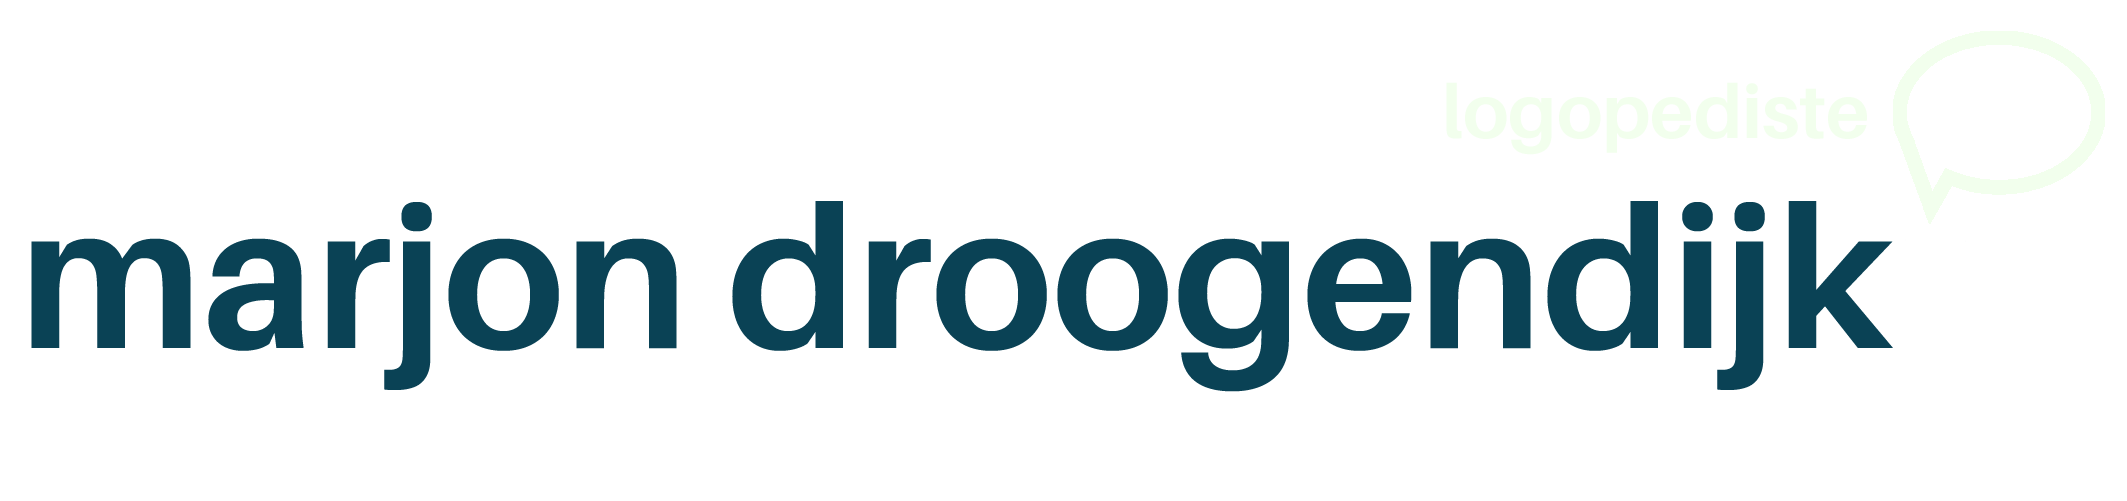 Marjon Droogendijk logopediste logo mobile